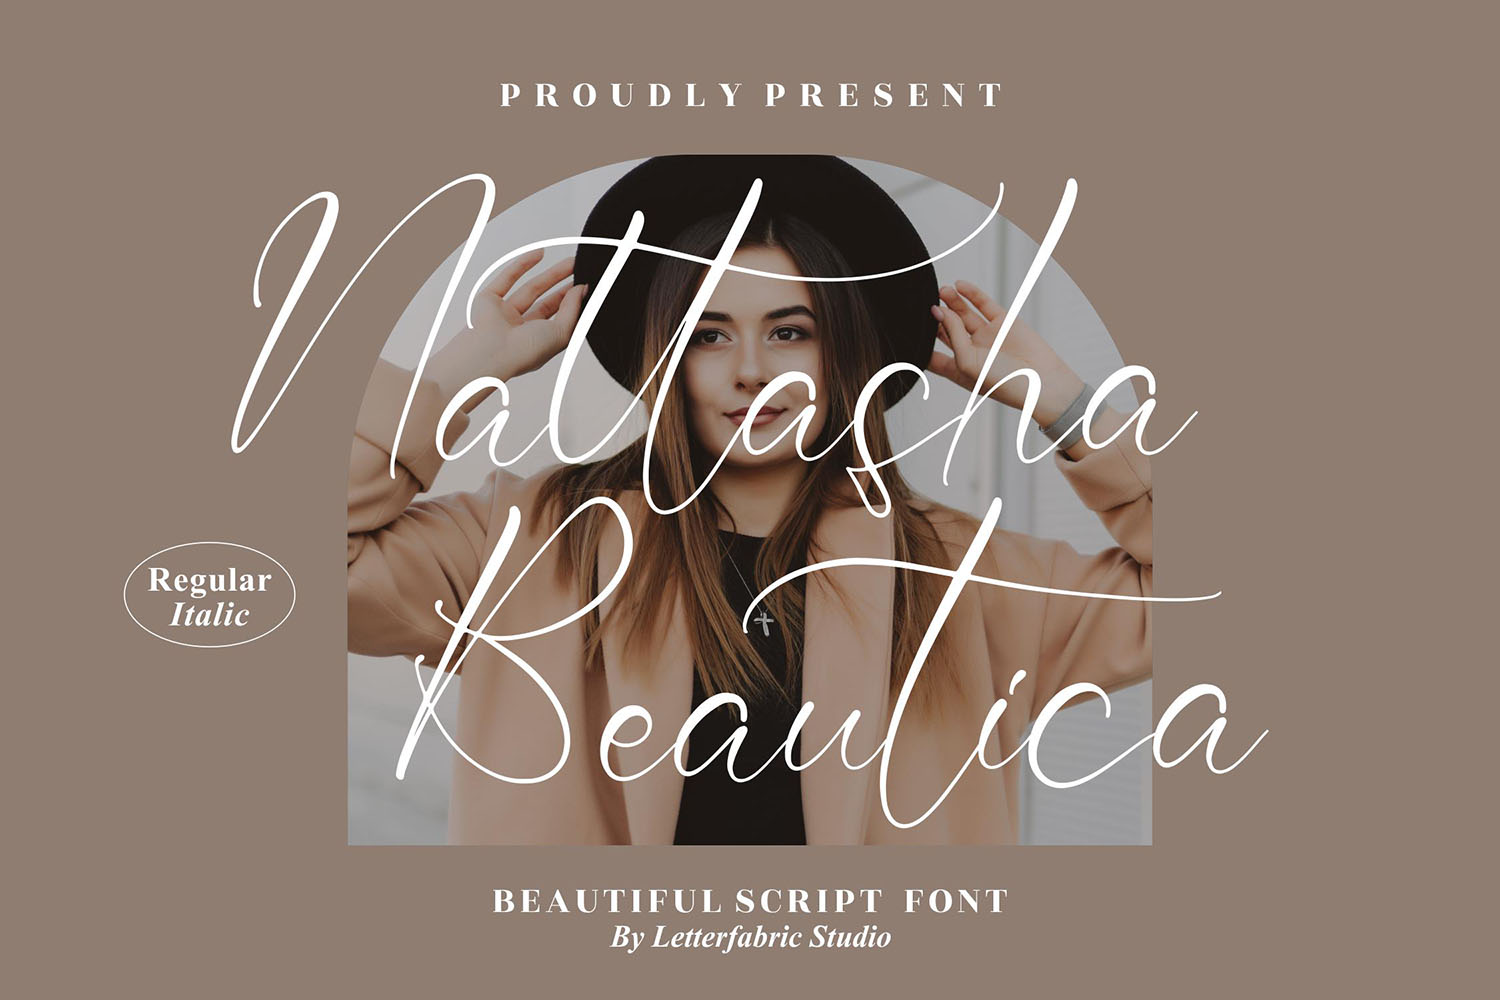 Nattasha Beautica Free Font